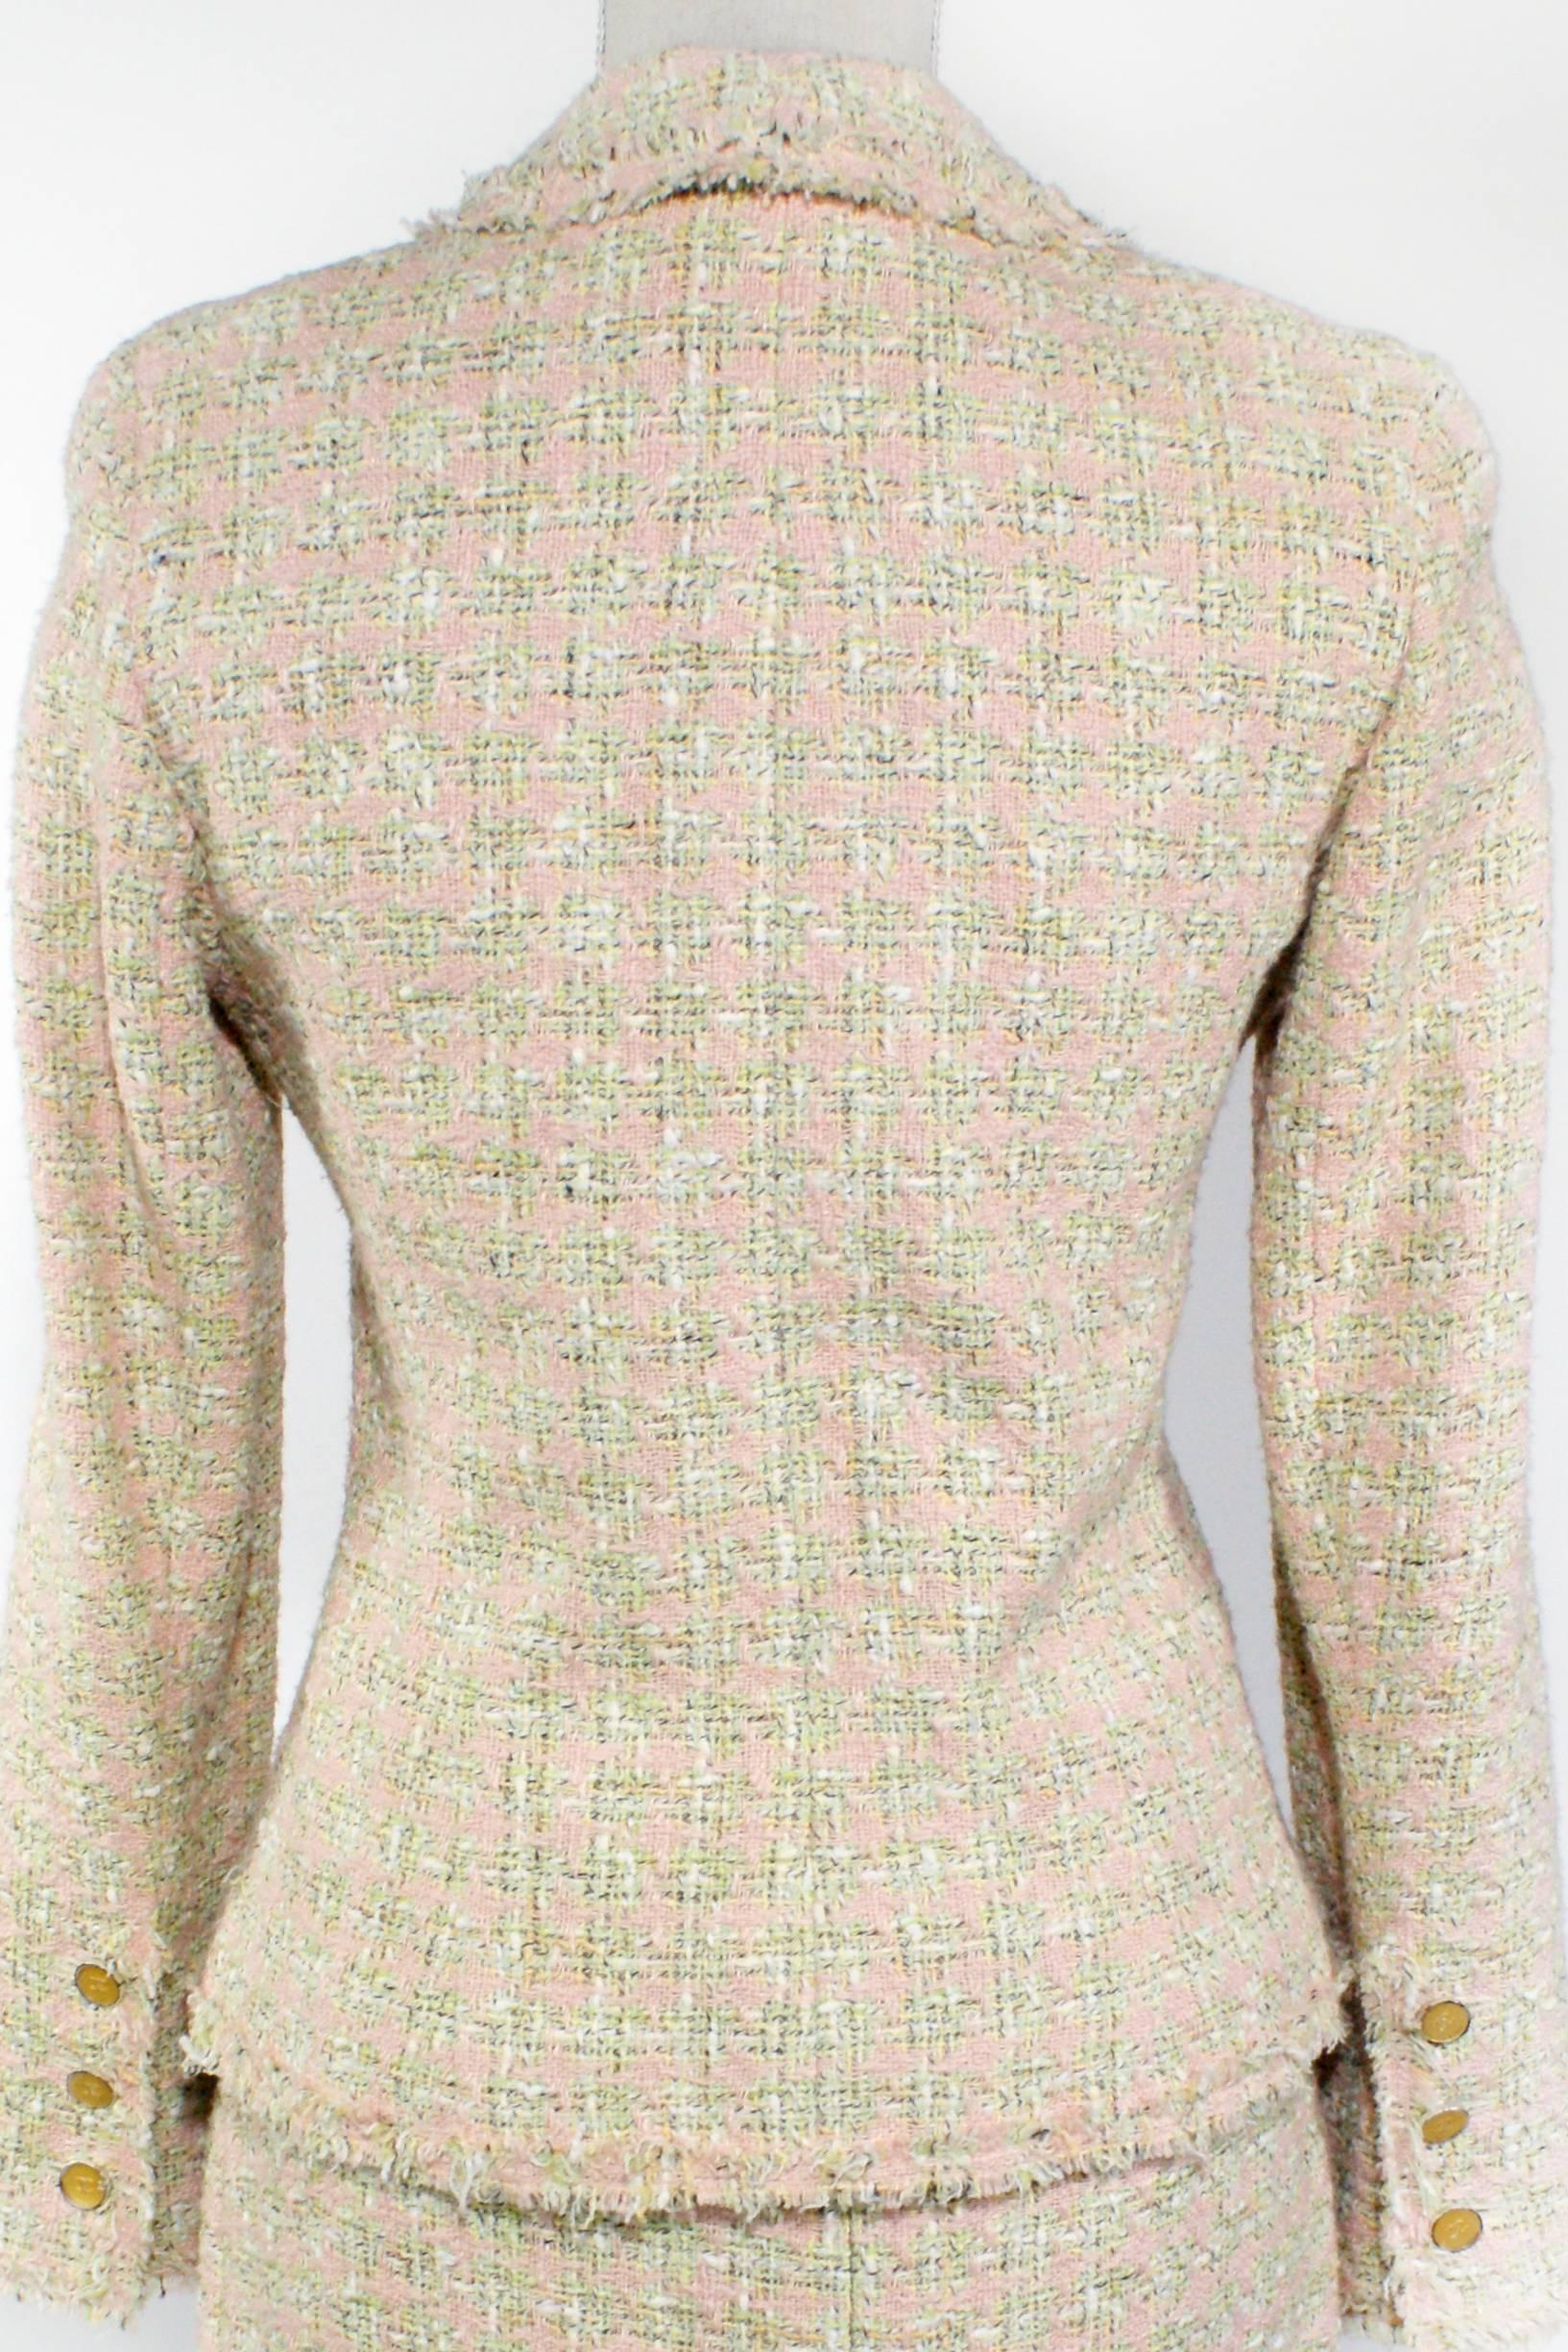 A classic Chanel ensemble 
Colors: Pink, Green, Cream
Golden logo buttons
Faux pockets
Size 38
